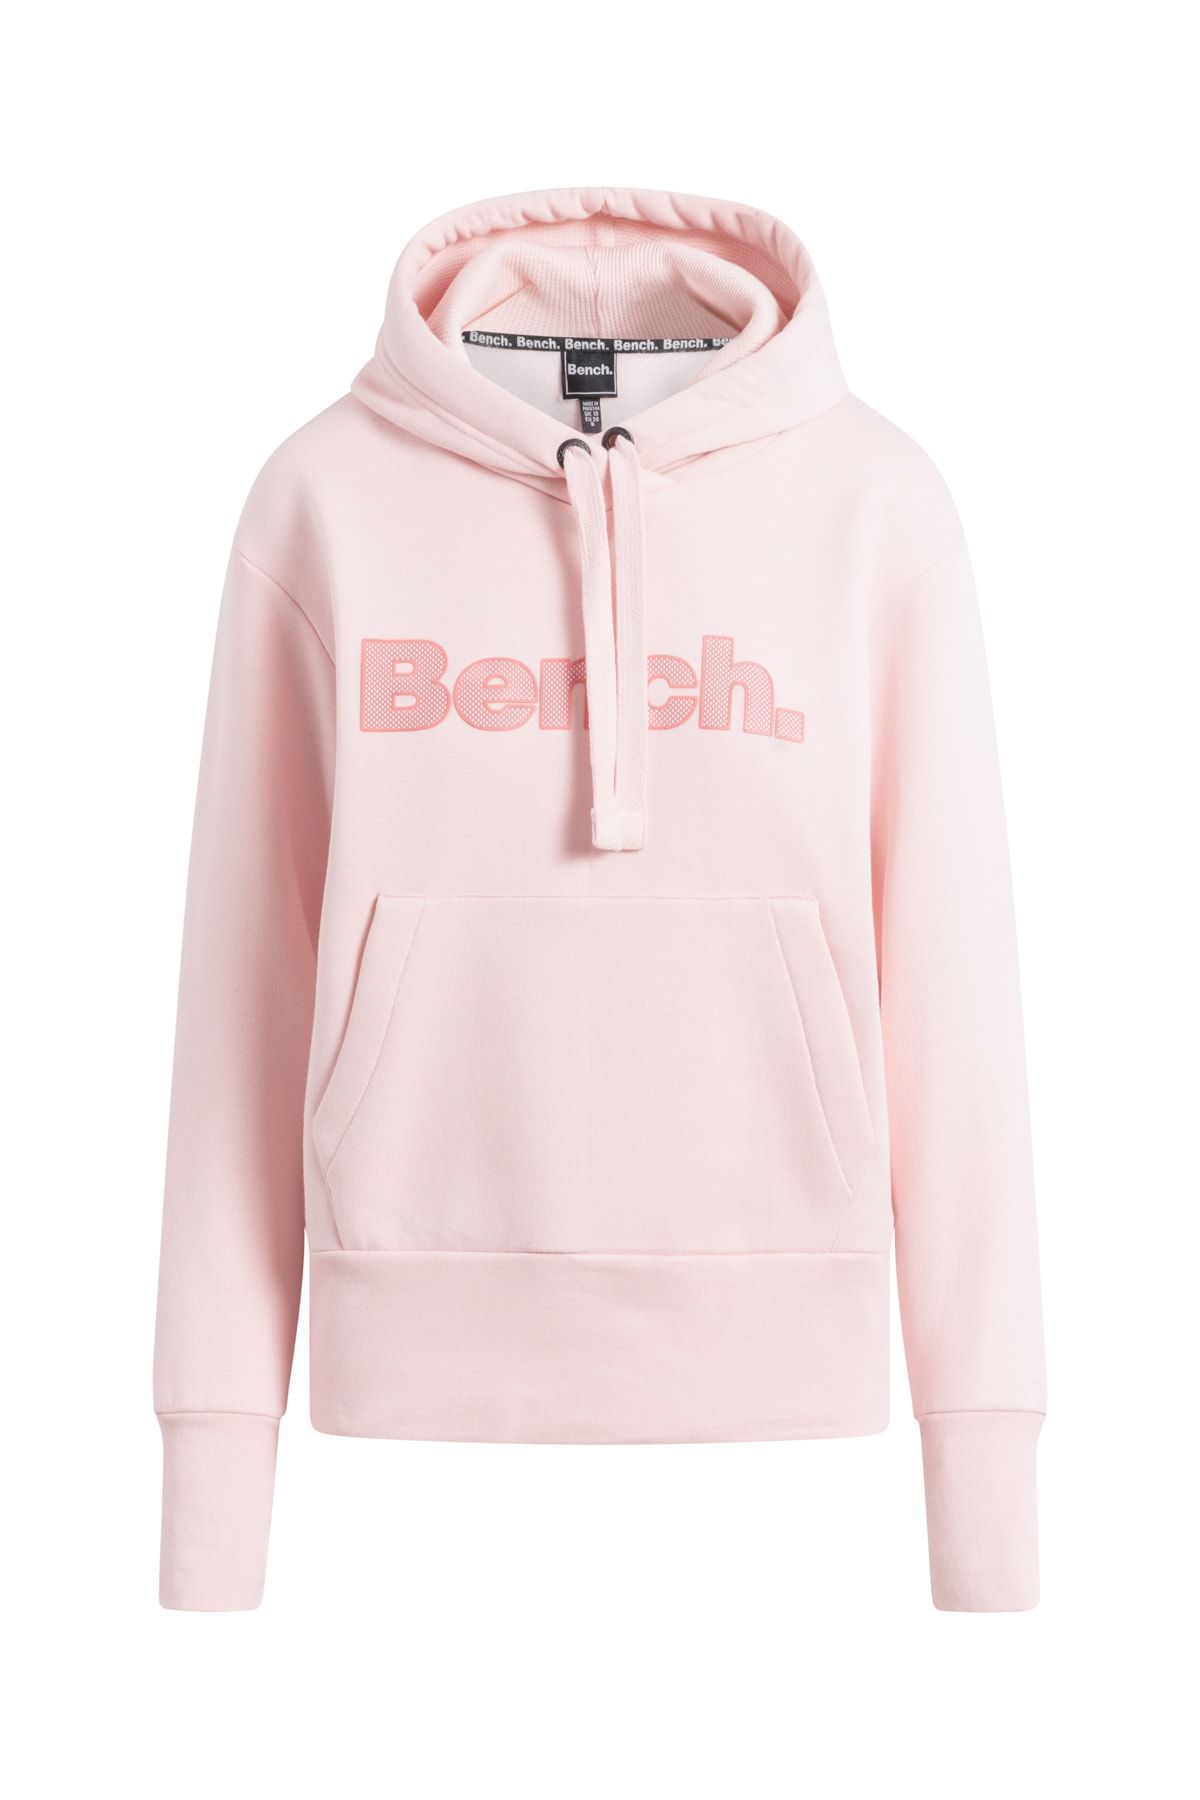 BENCH Sweatshirt Fit Rosa - Trendyol Regular - -